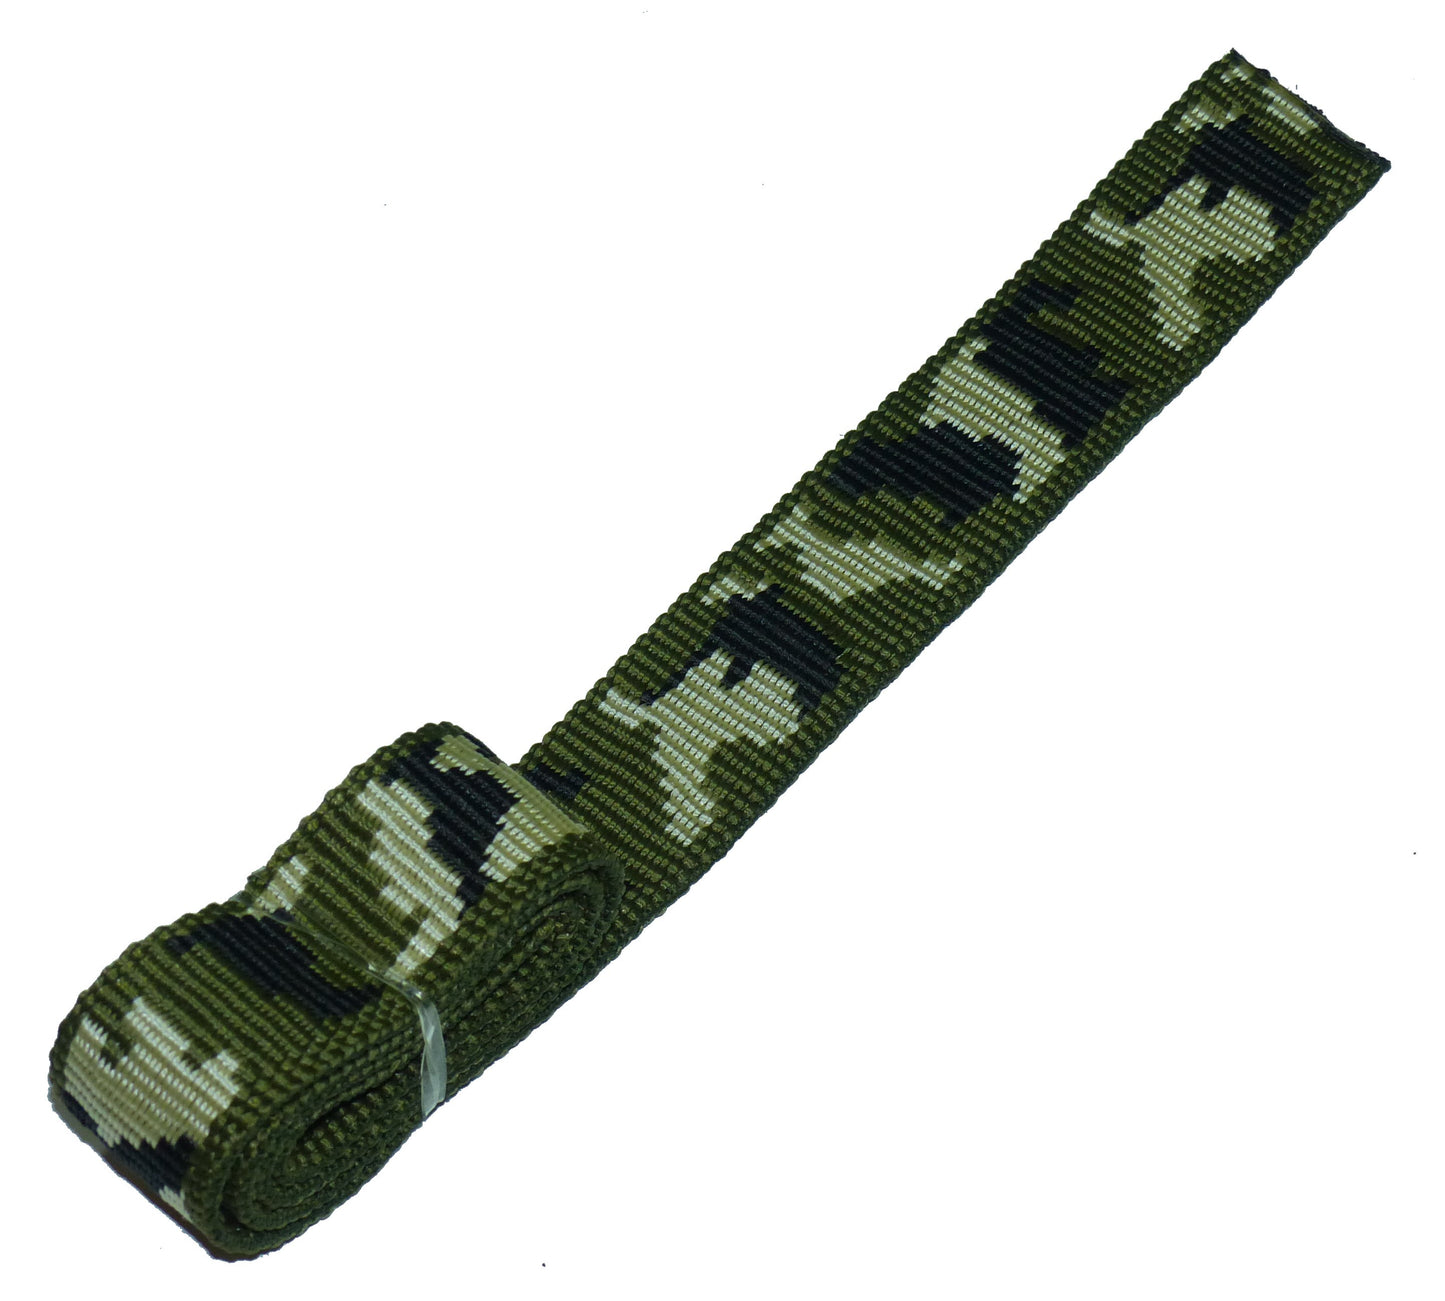 Benristraps 25mm Webbing in Camouflage Patterns (5 metre length)